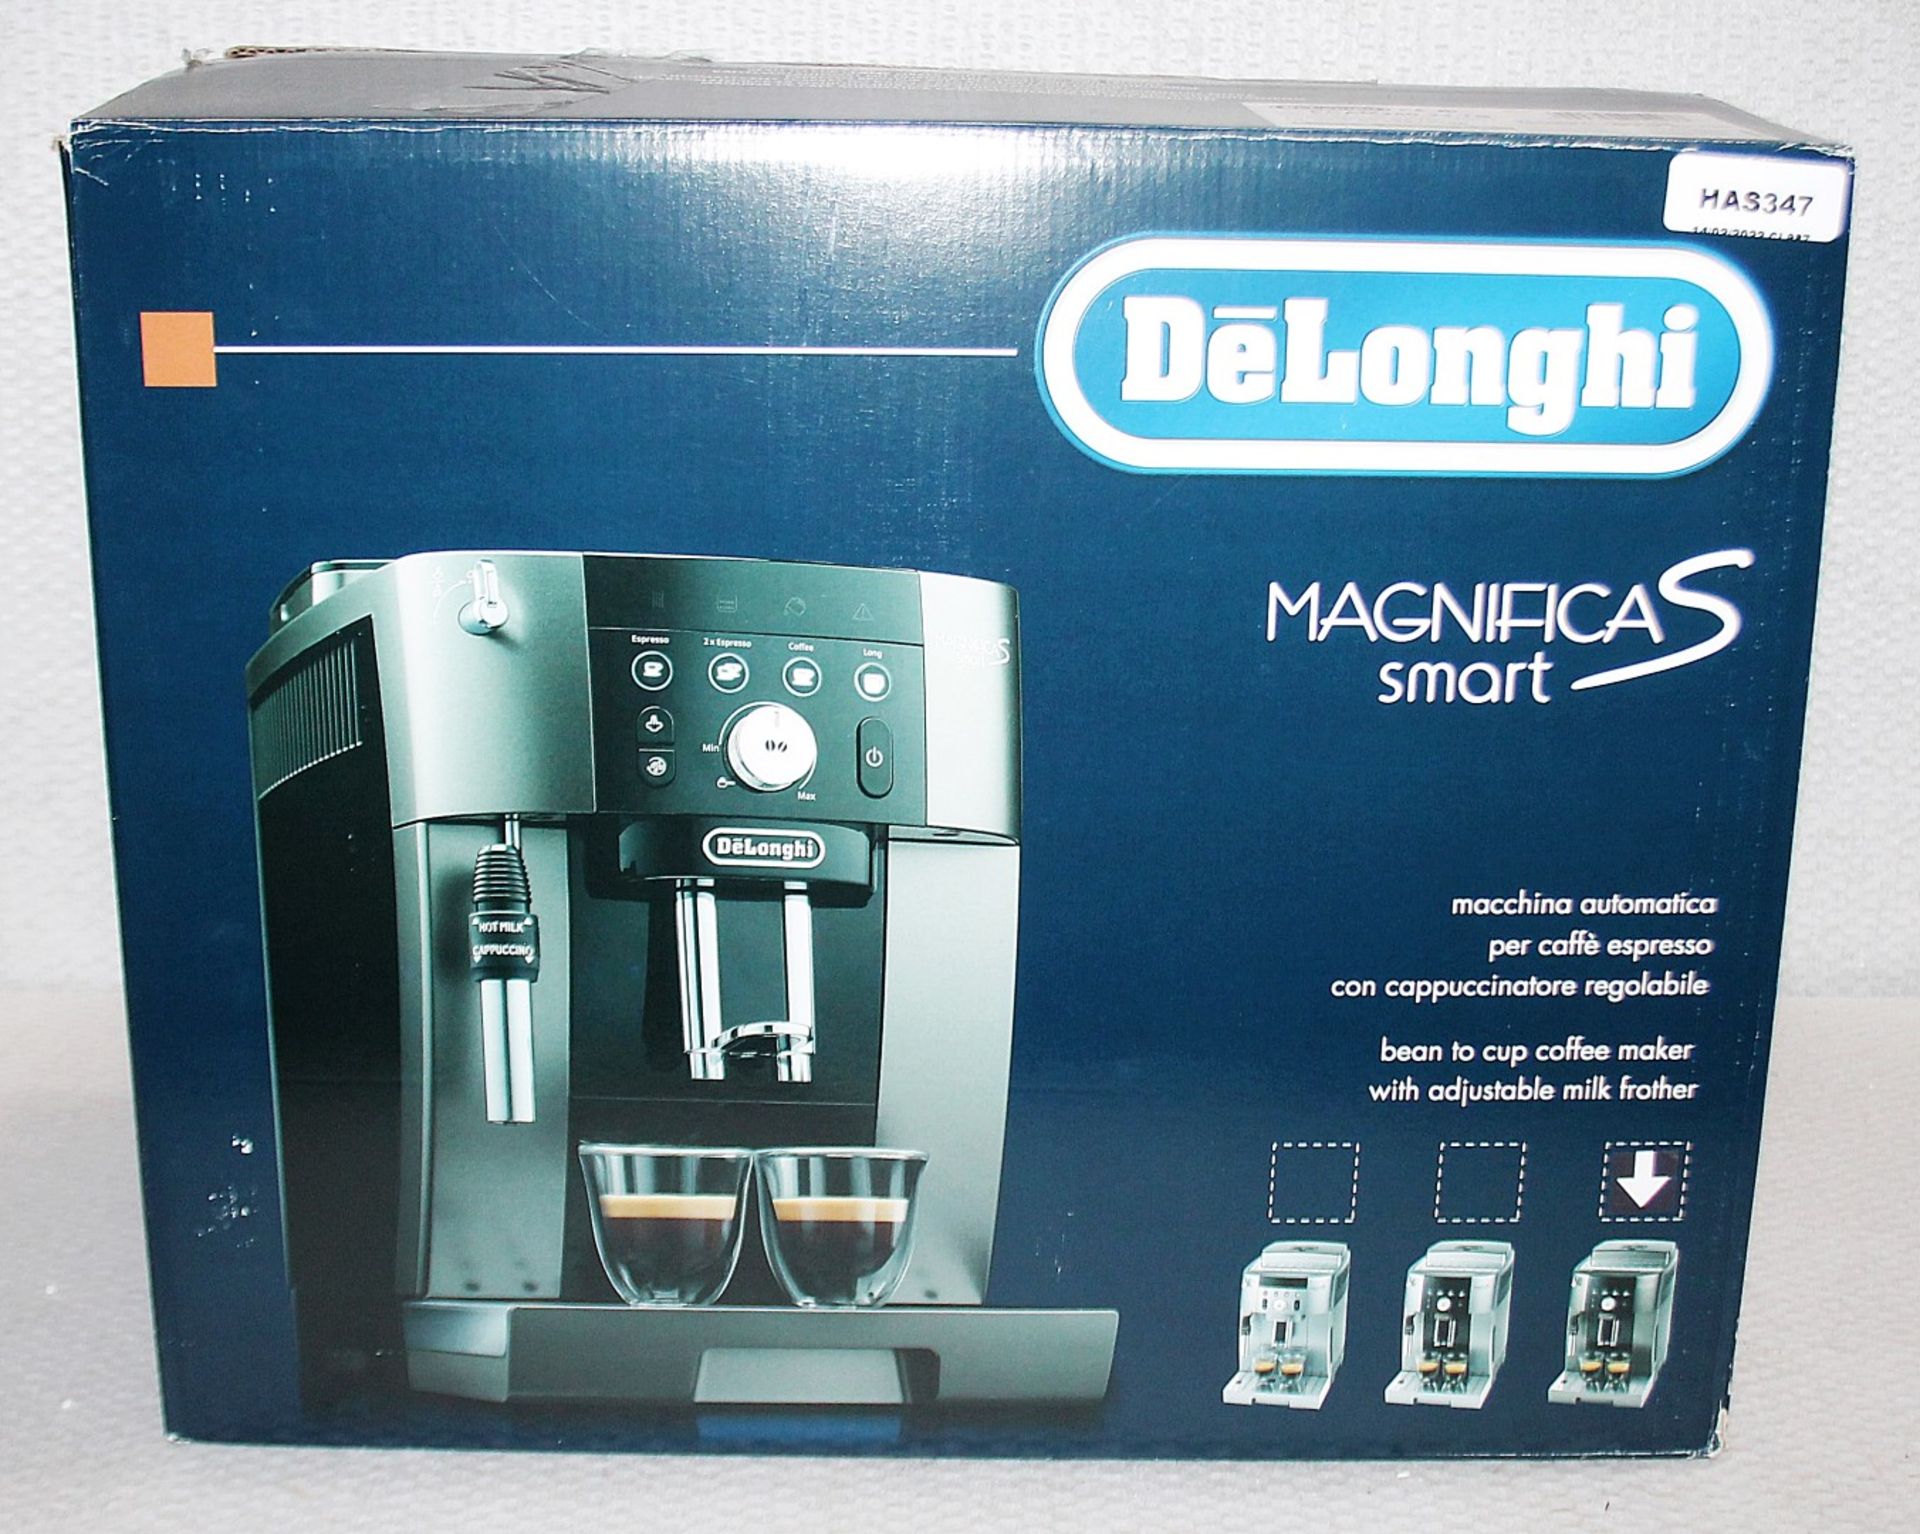 1 x DE'LONGHI Magnifica S Smart Coffee Machine - Boxed - Original Price £469.00 - Ref: HAS347 - Image 9 of 13